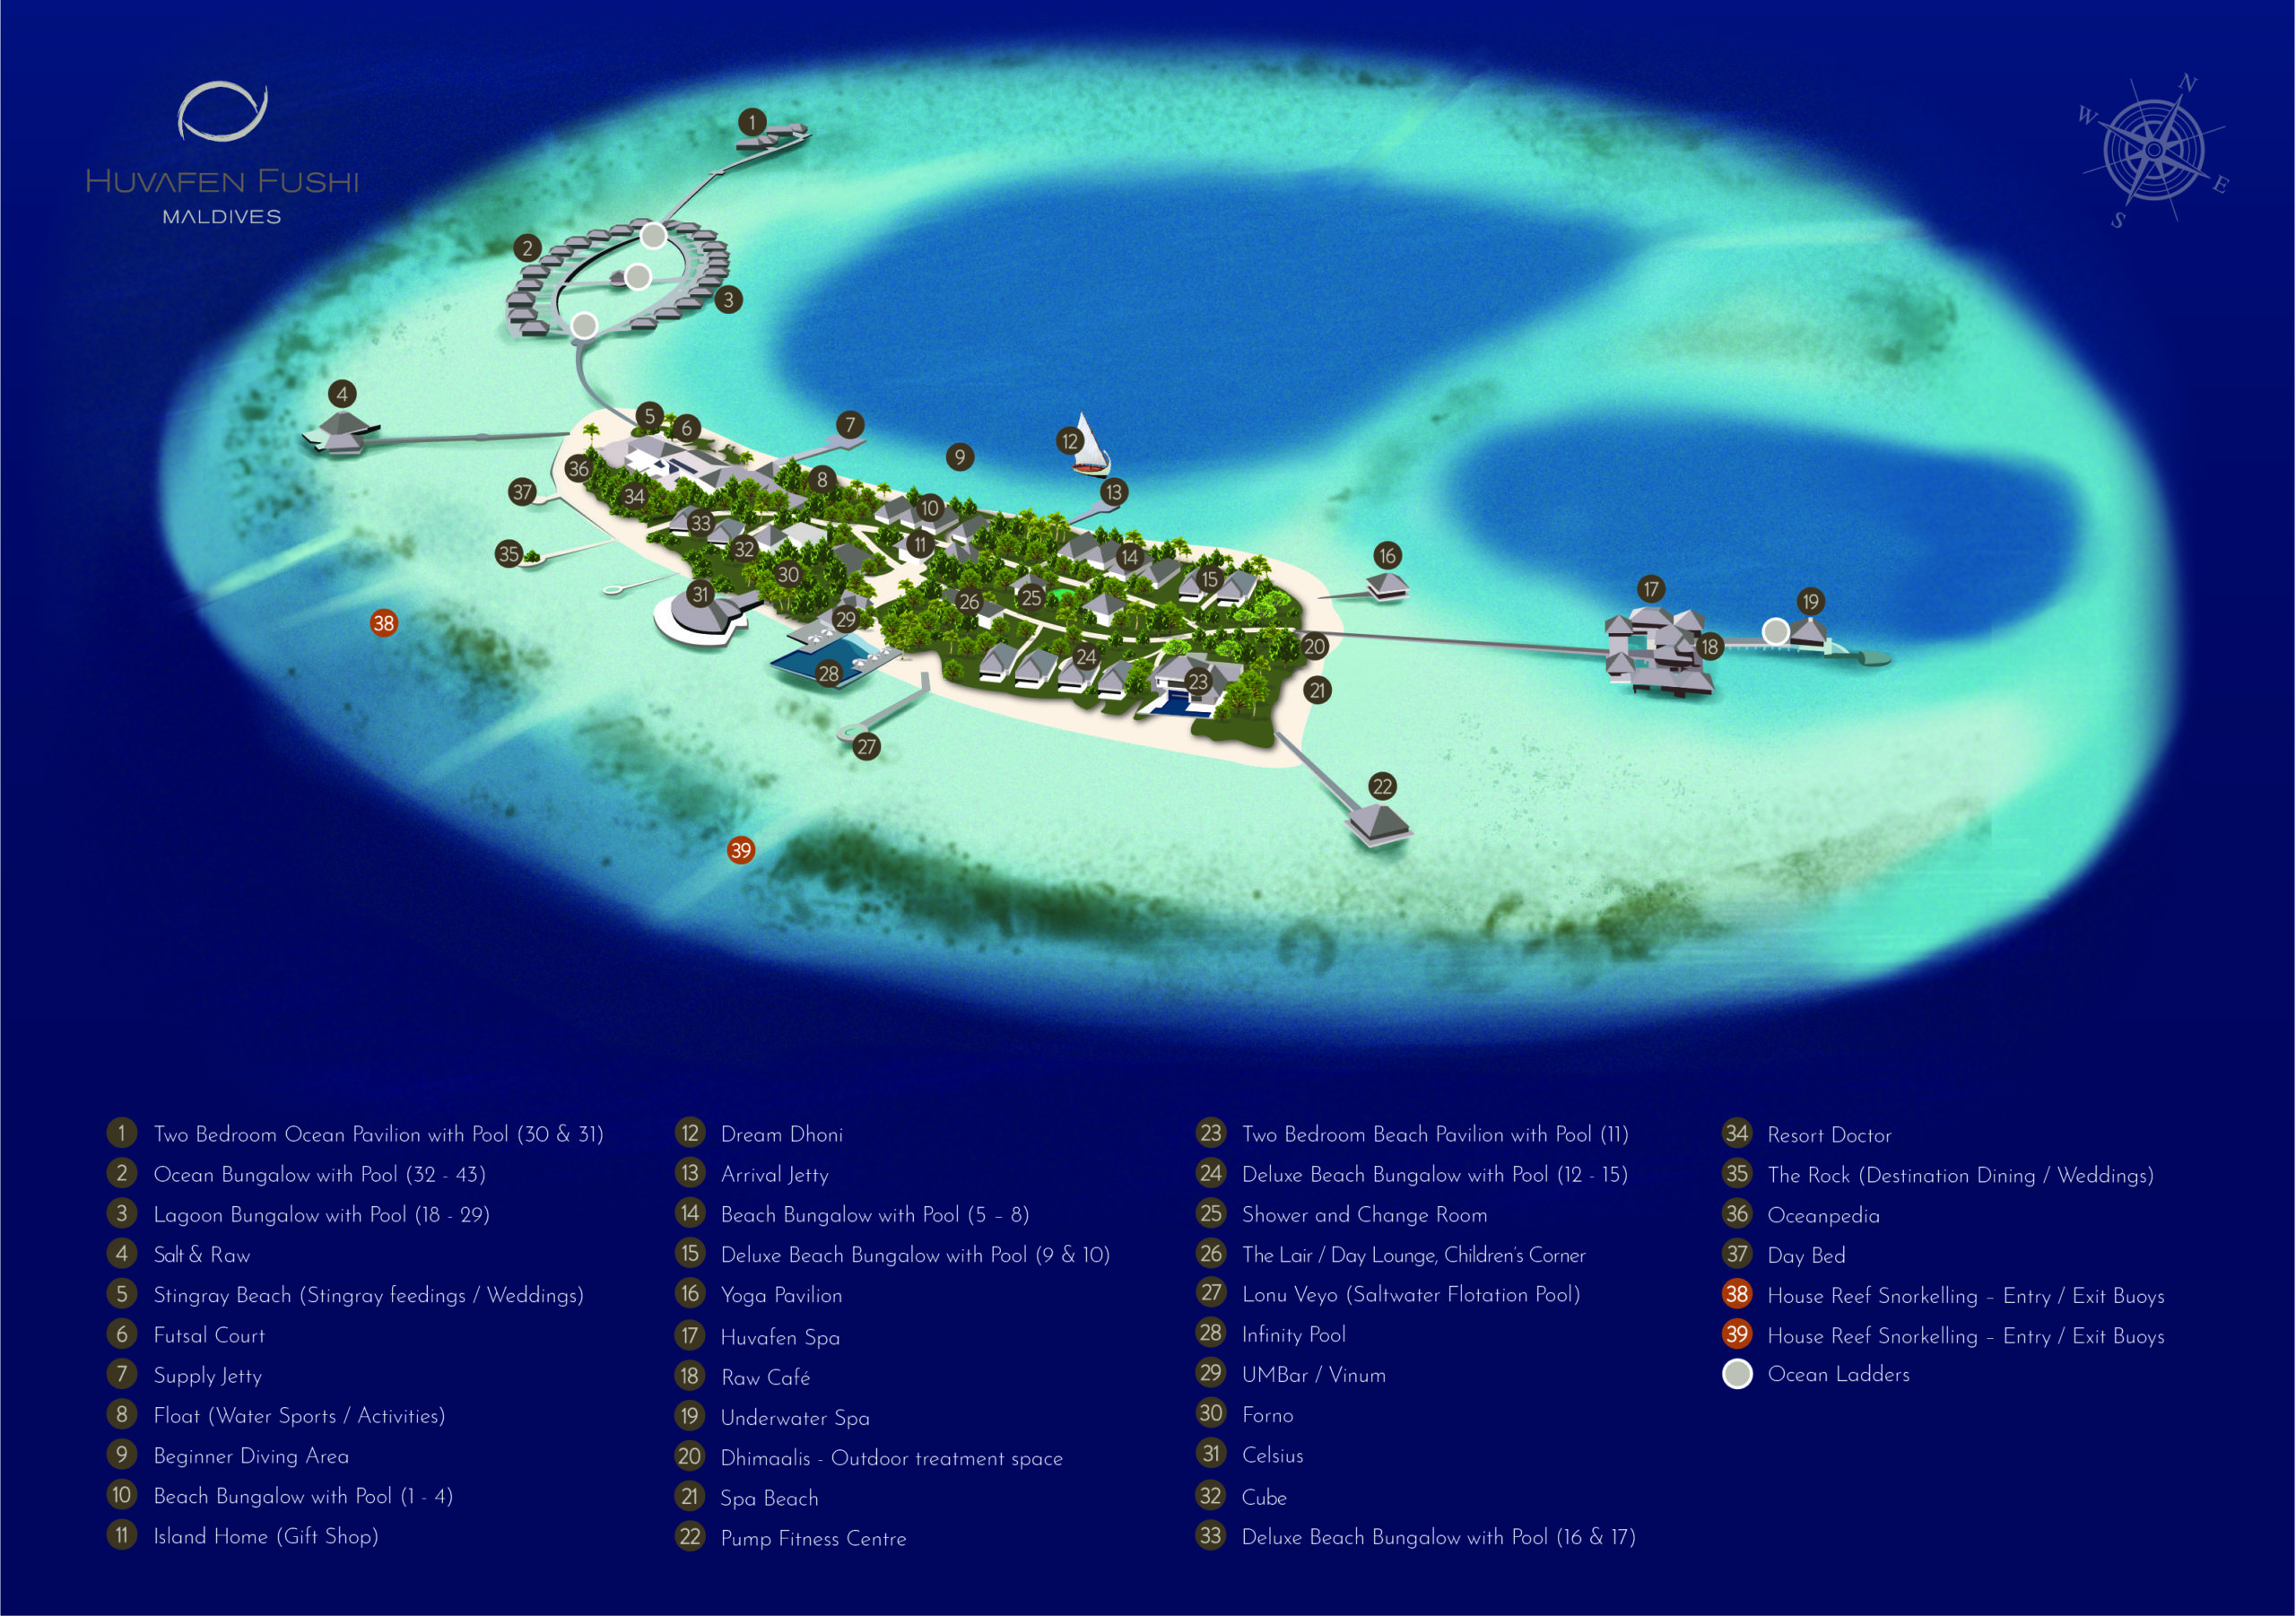 Sun Siyam Olhuveli Maldives карта отеля